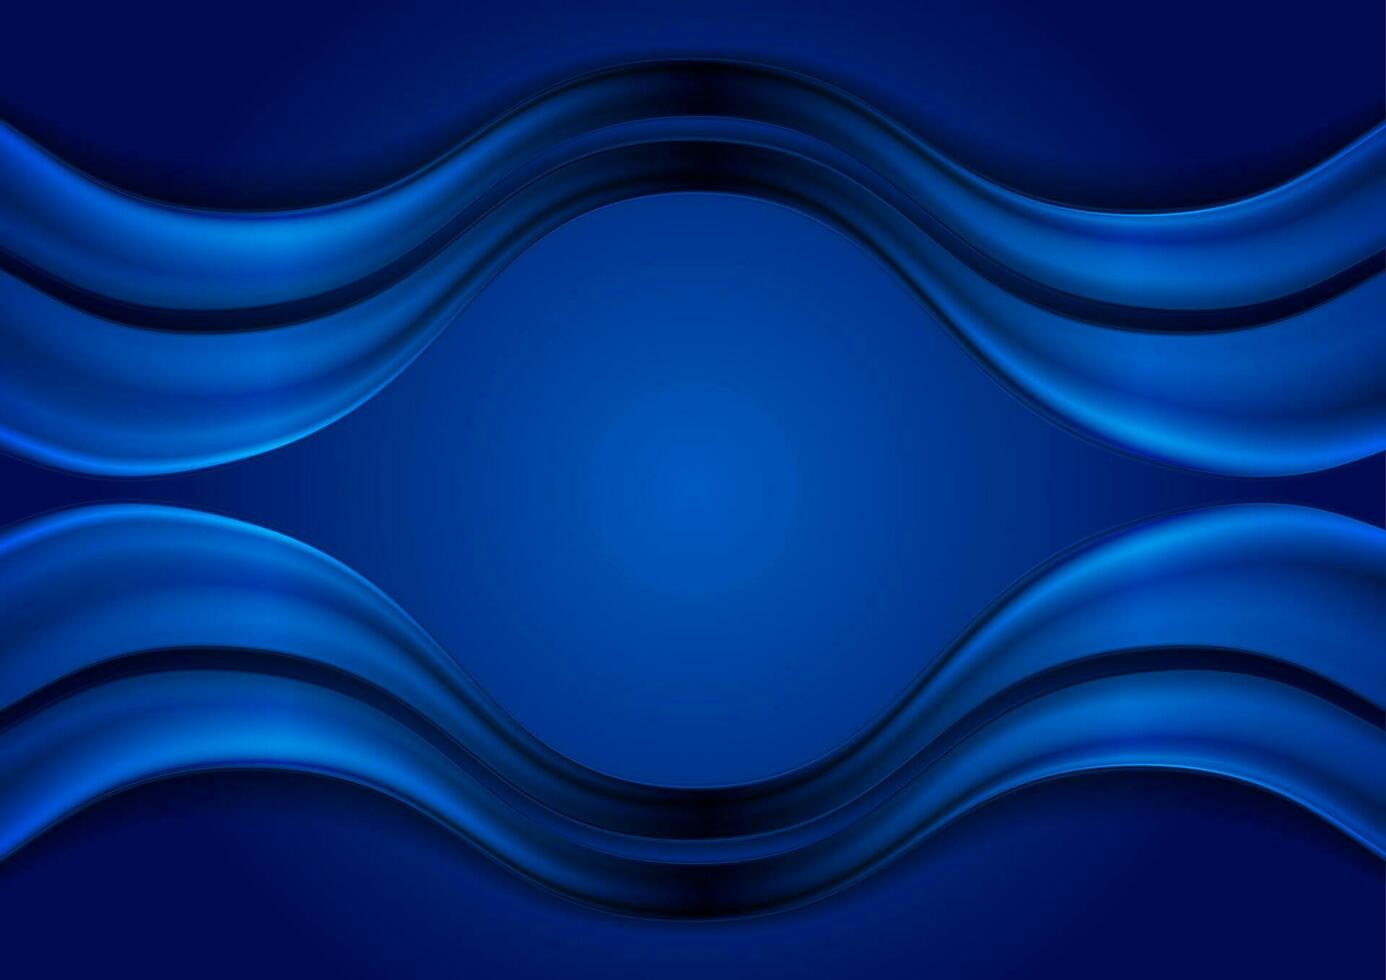 Dark blue abstract smooth wavy vector background